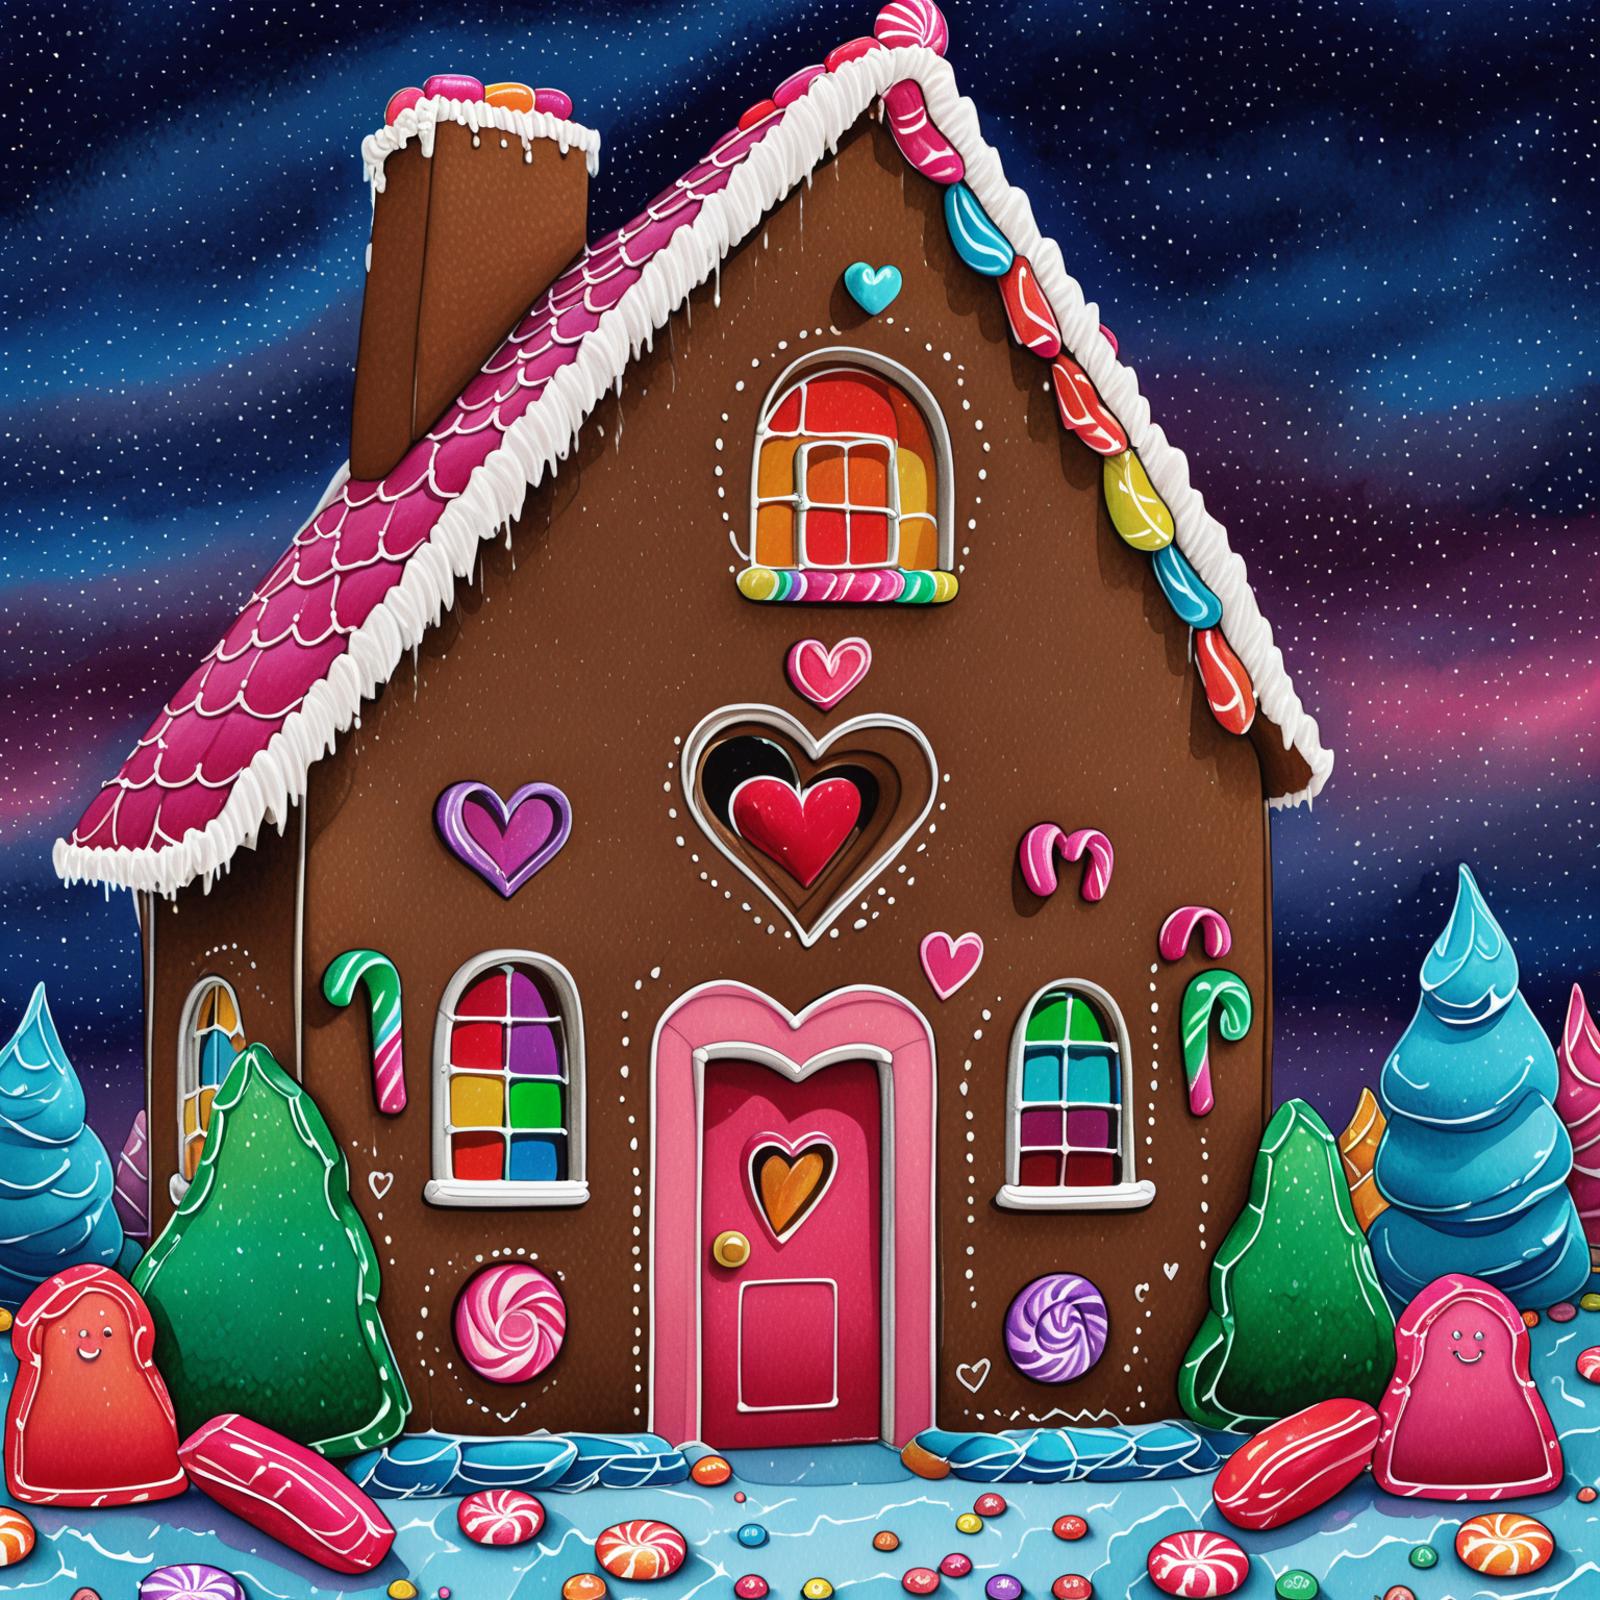 Gingerbread Houses for SDXL image by eurotaku